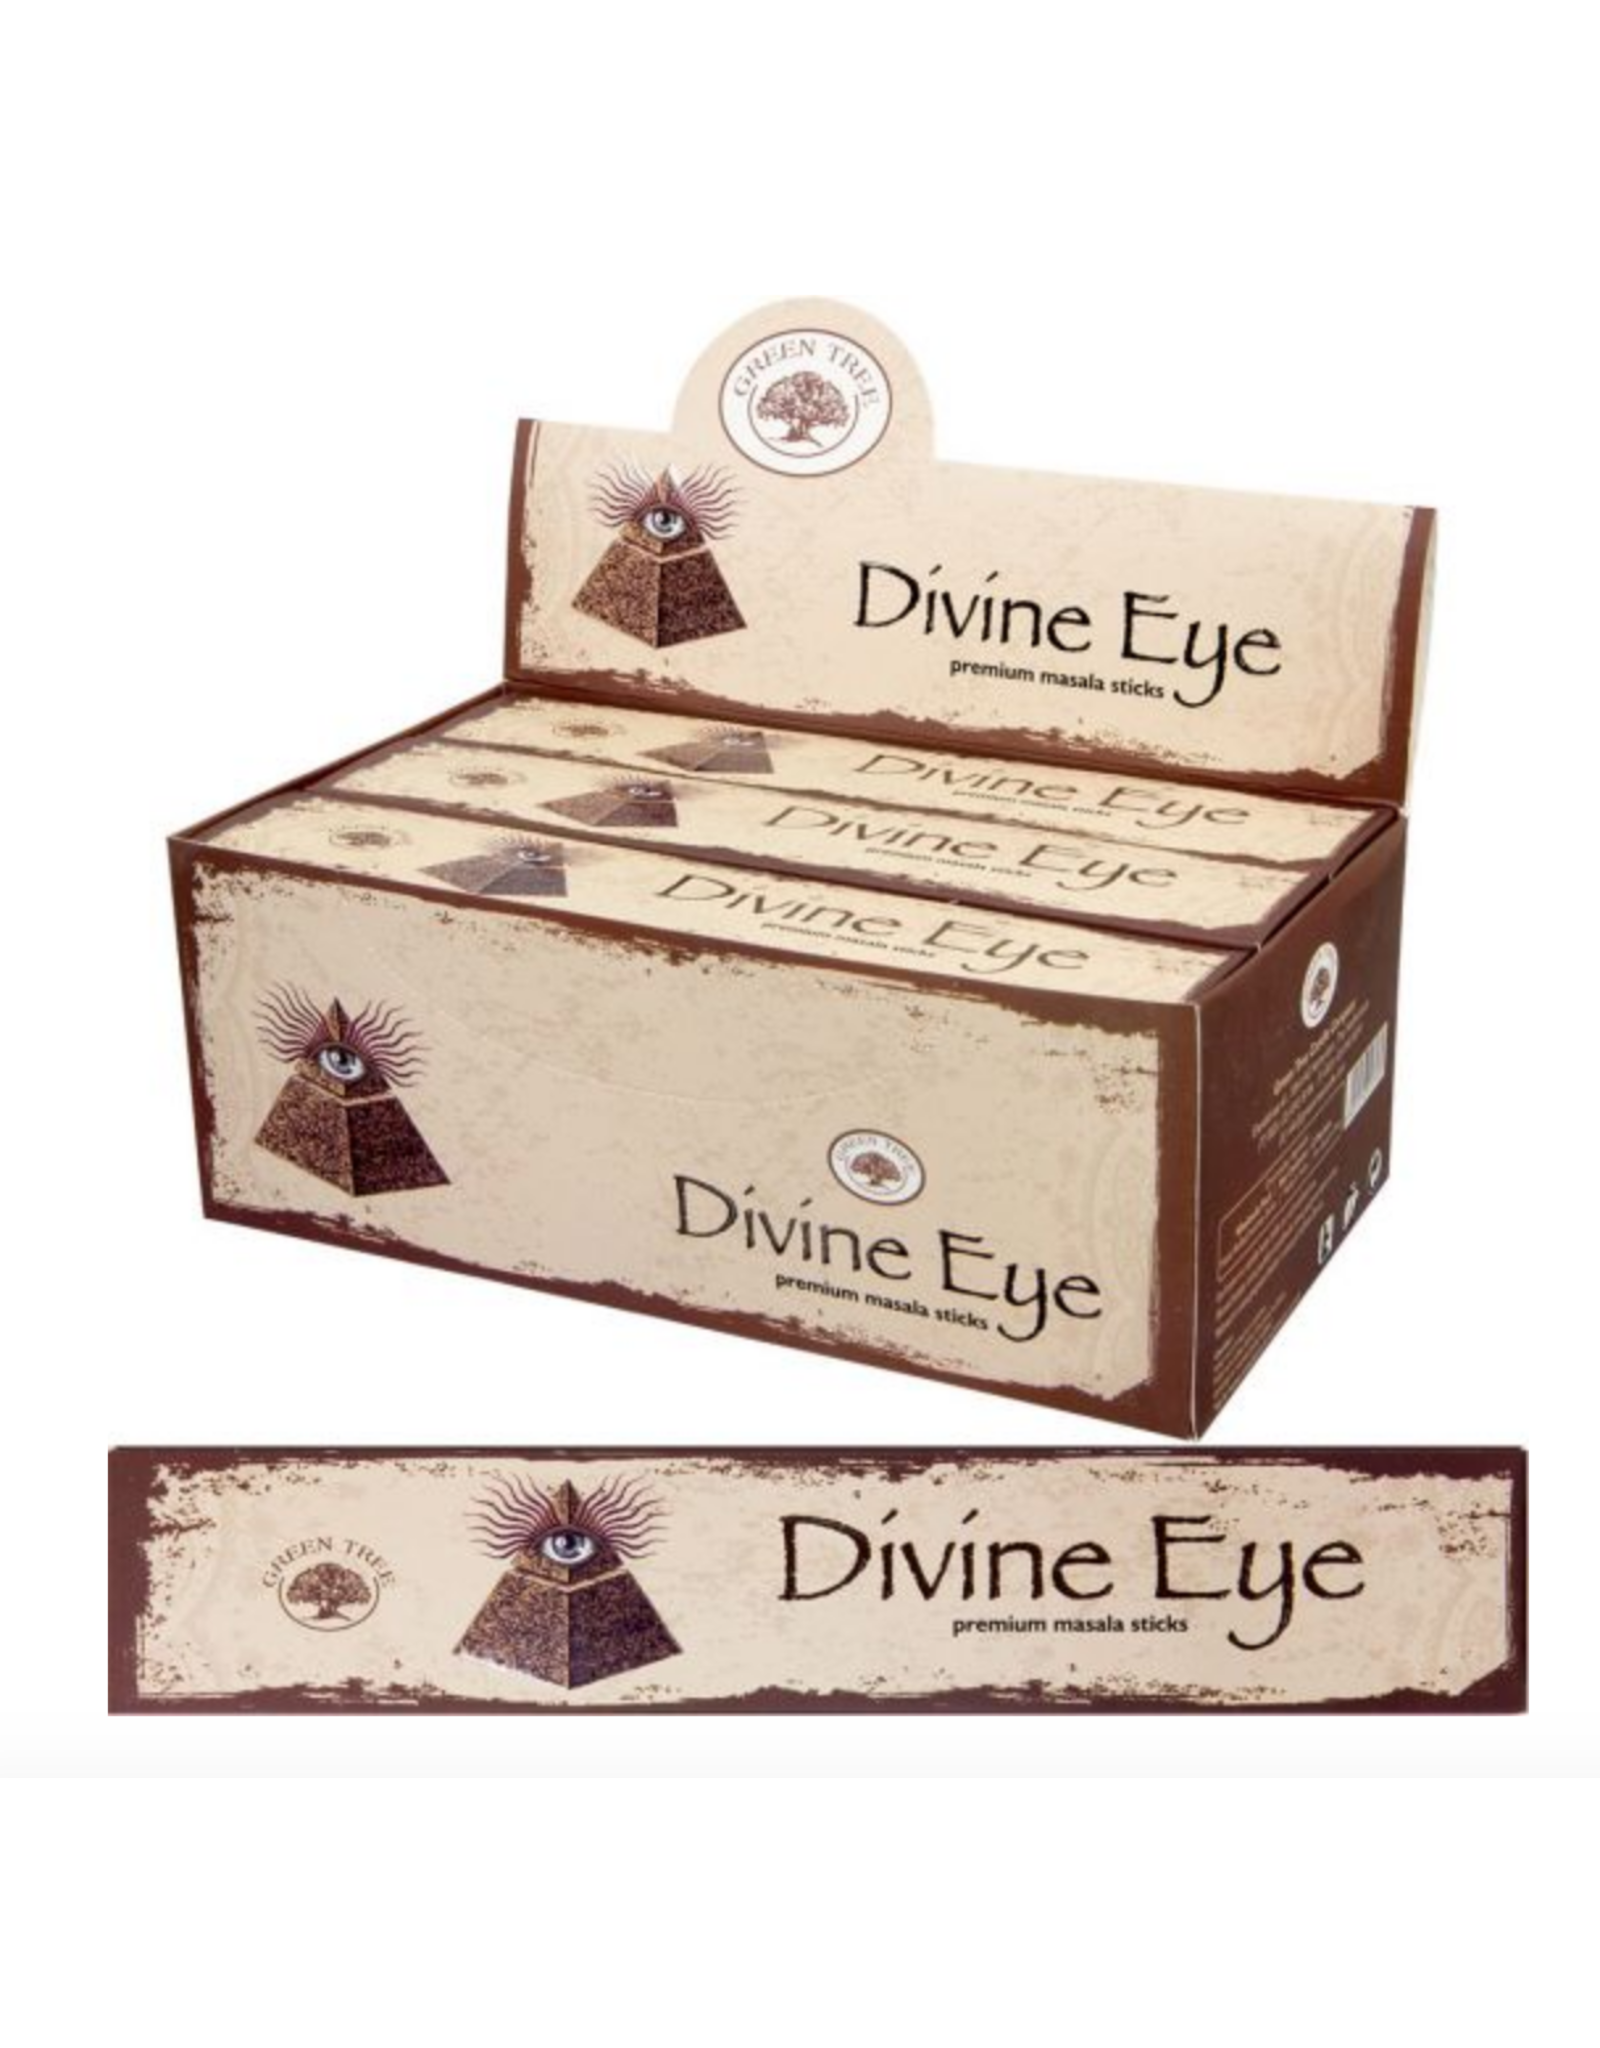 download free eye divine